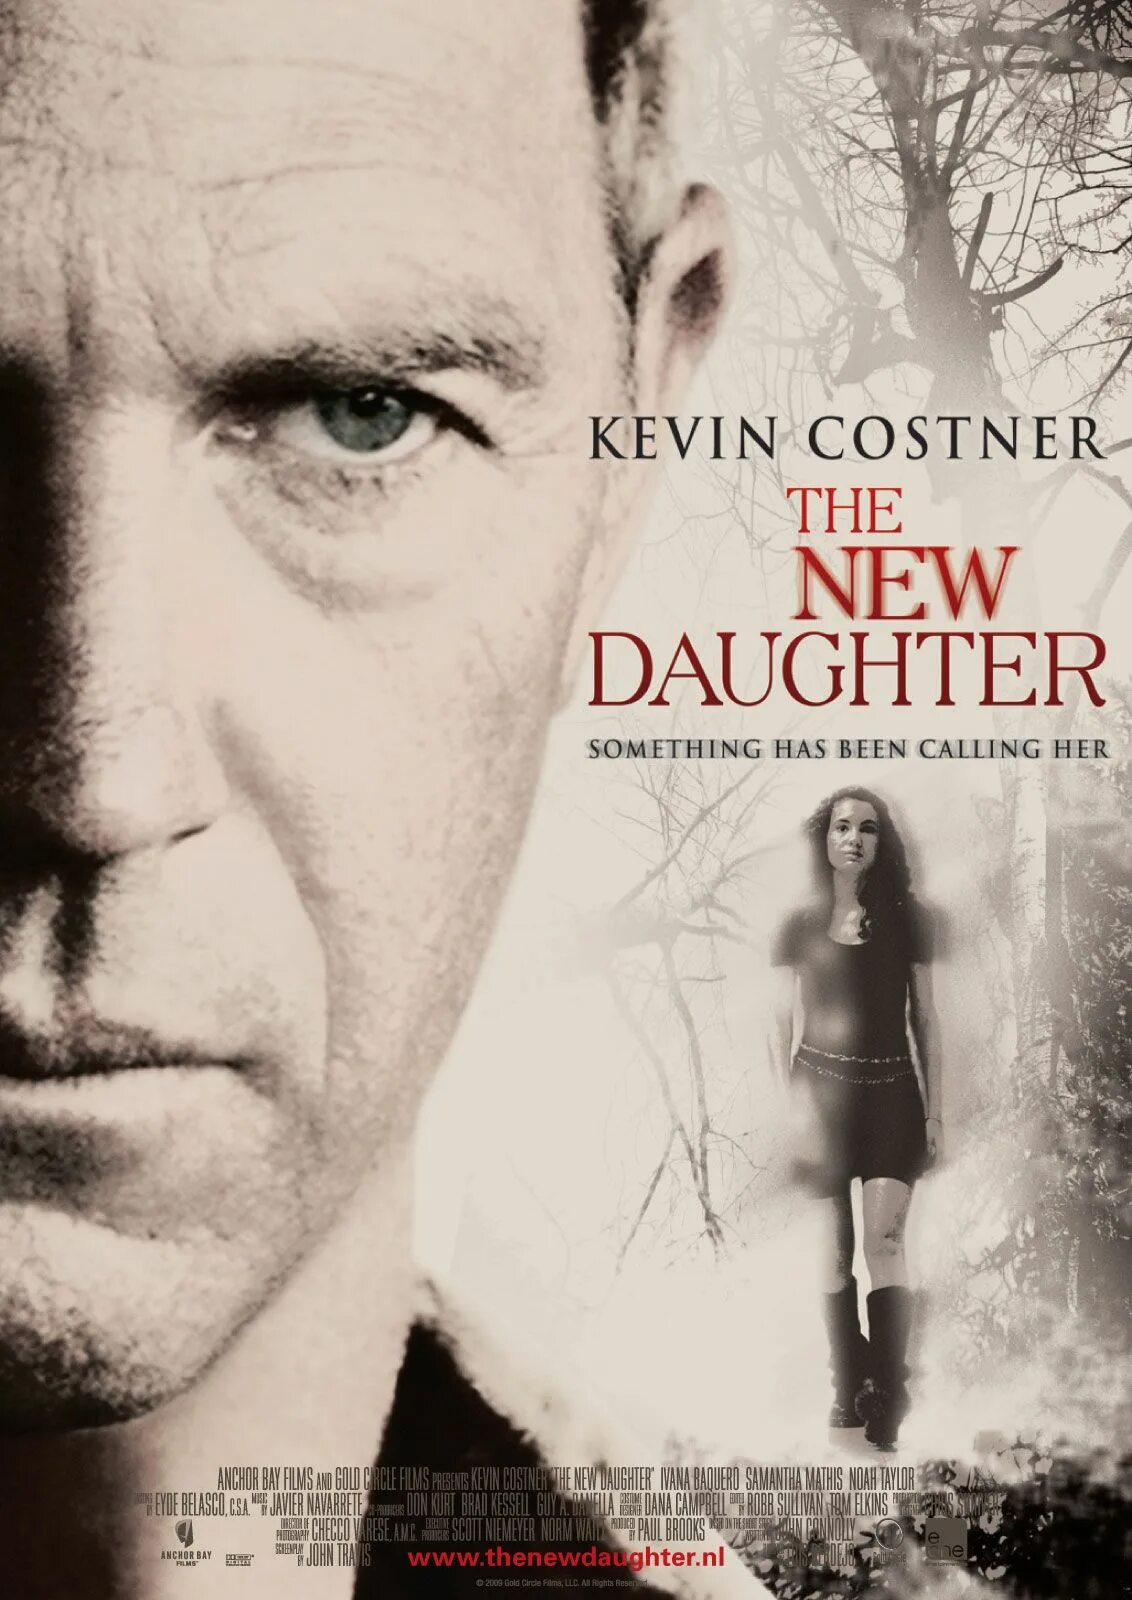 The new daughter. Проклятая Кевин Костнер.